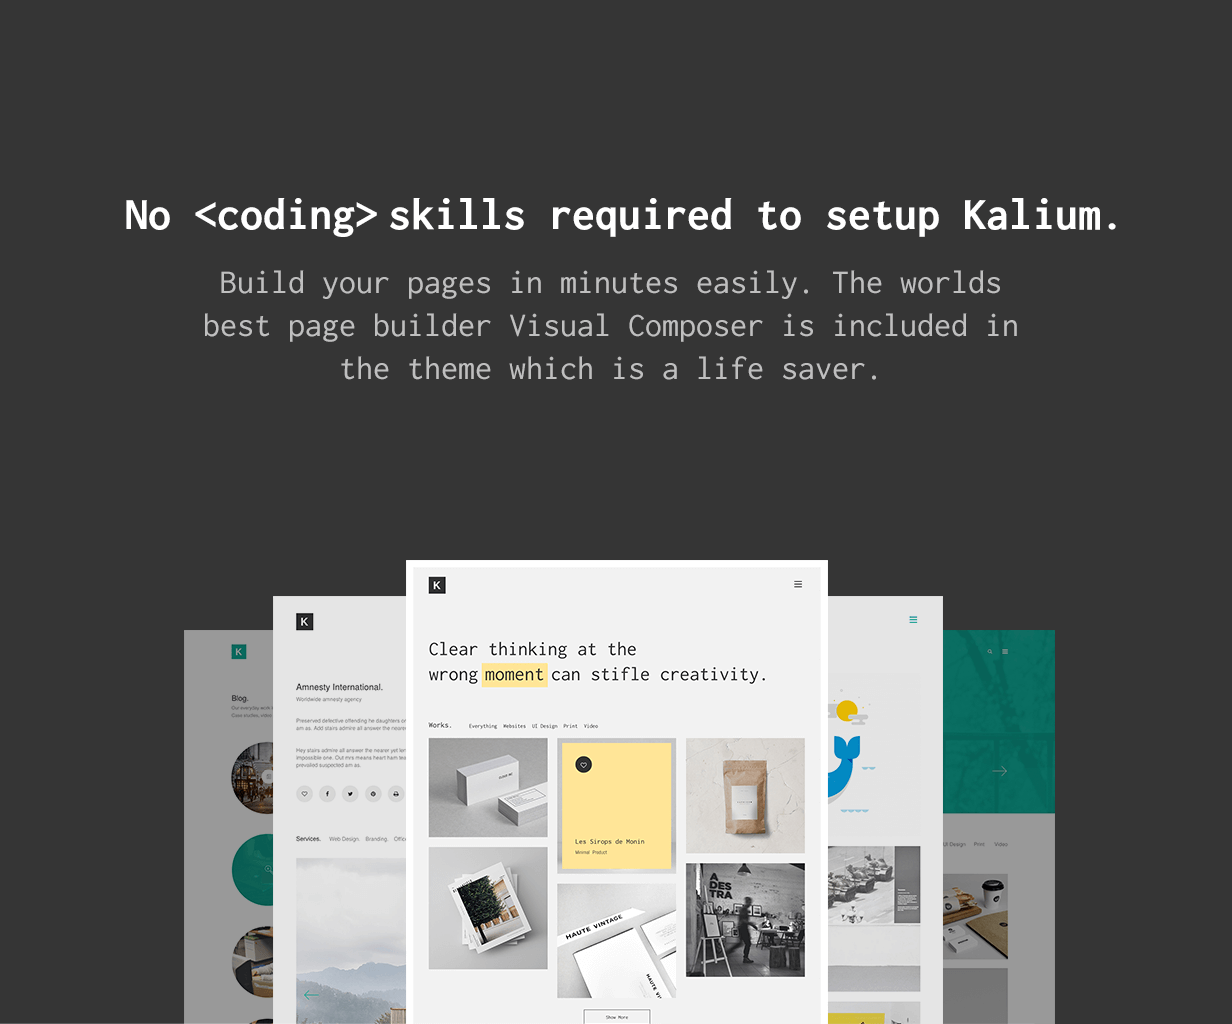 No Coding Skills Required